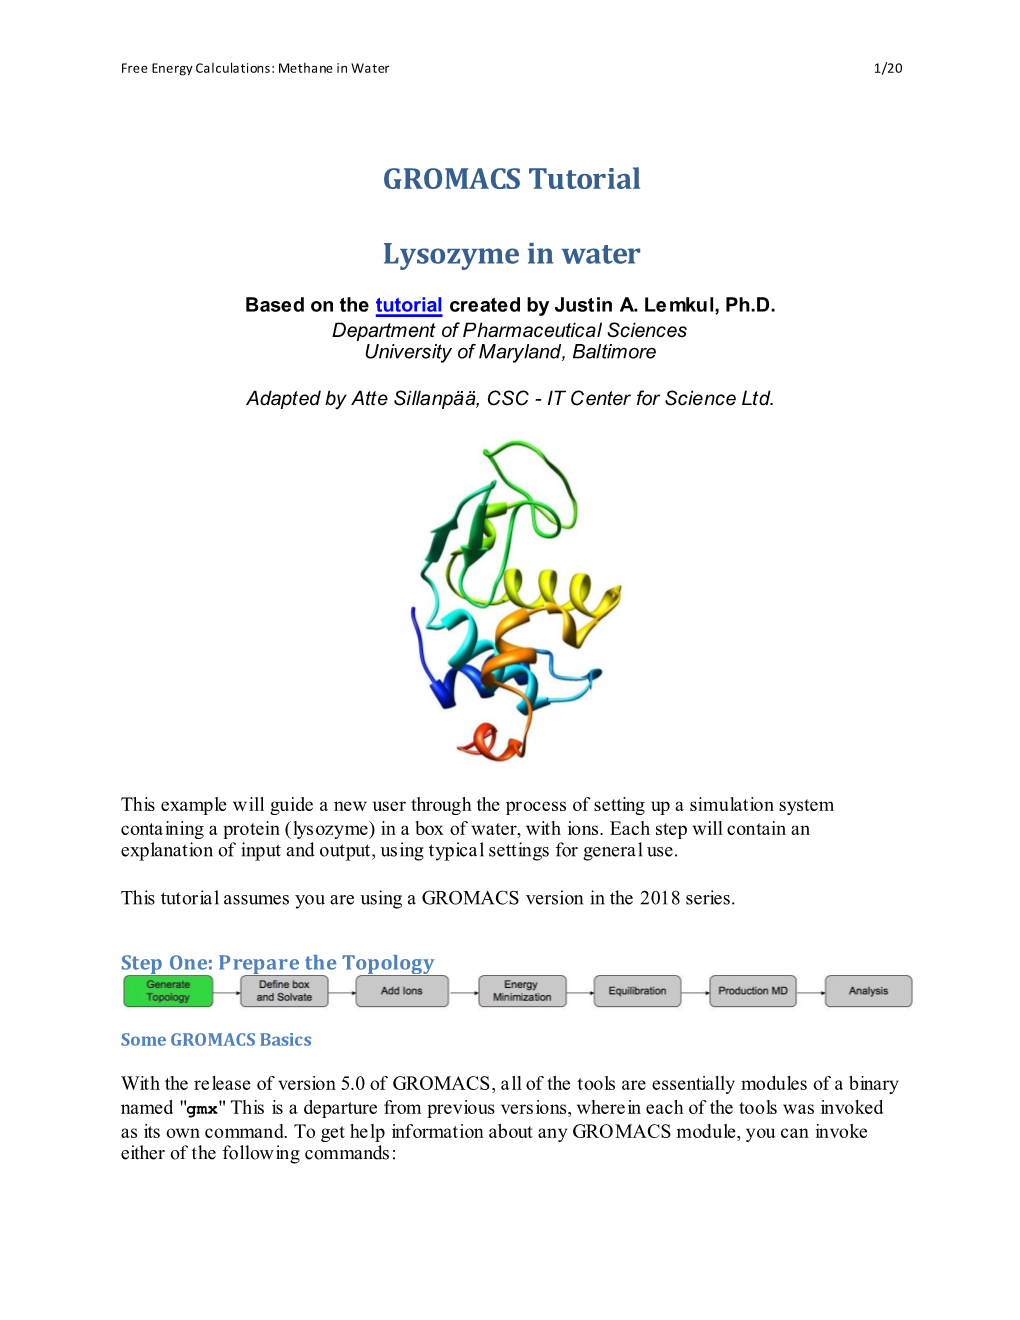 GROMACS Tutorial Lysozyme in Water